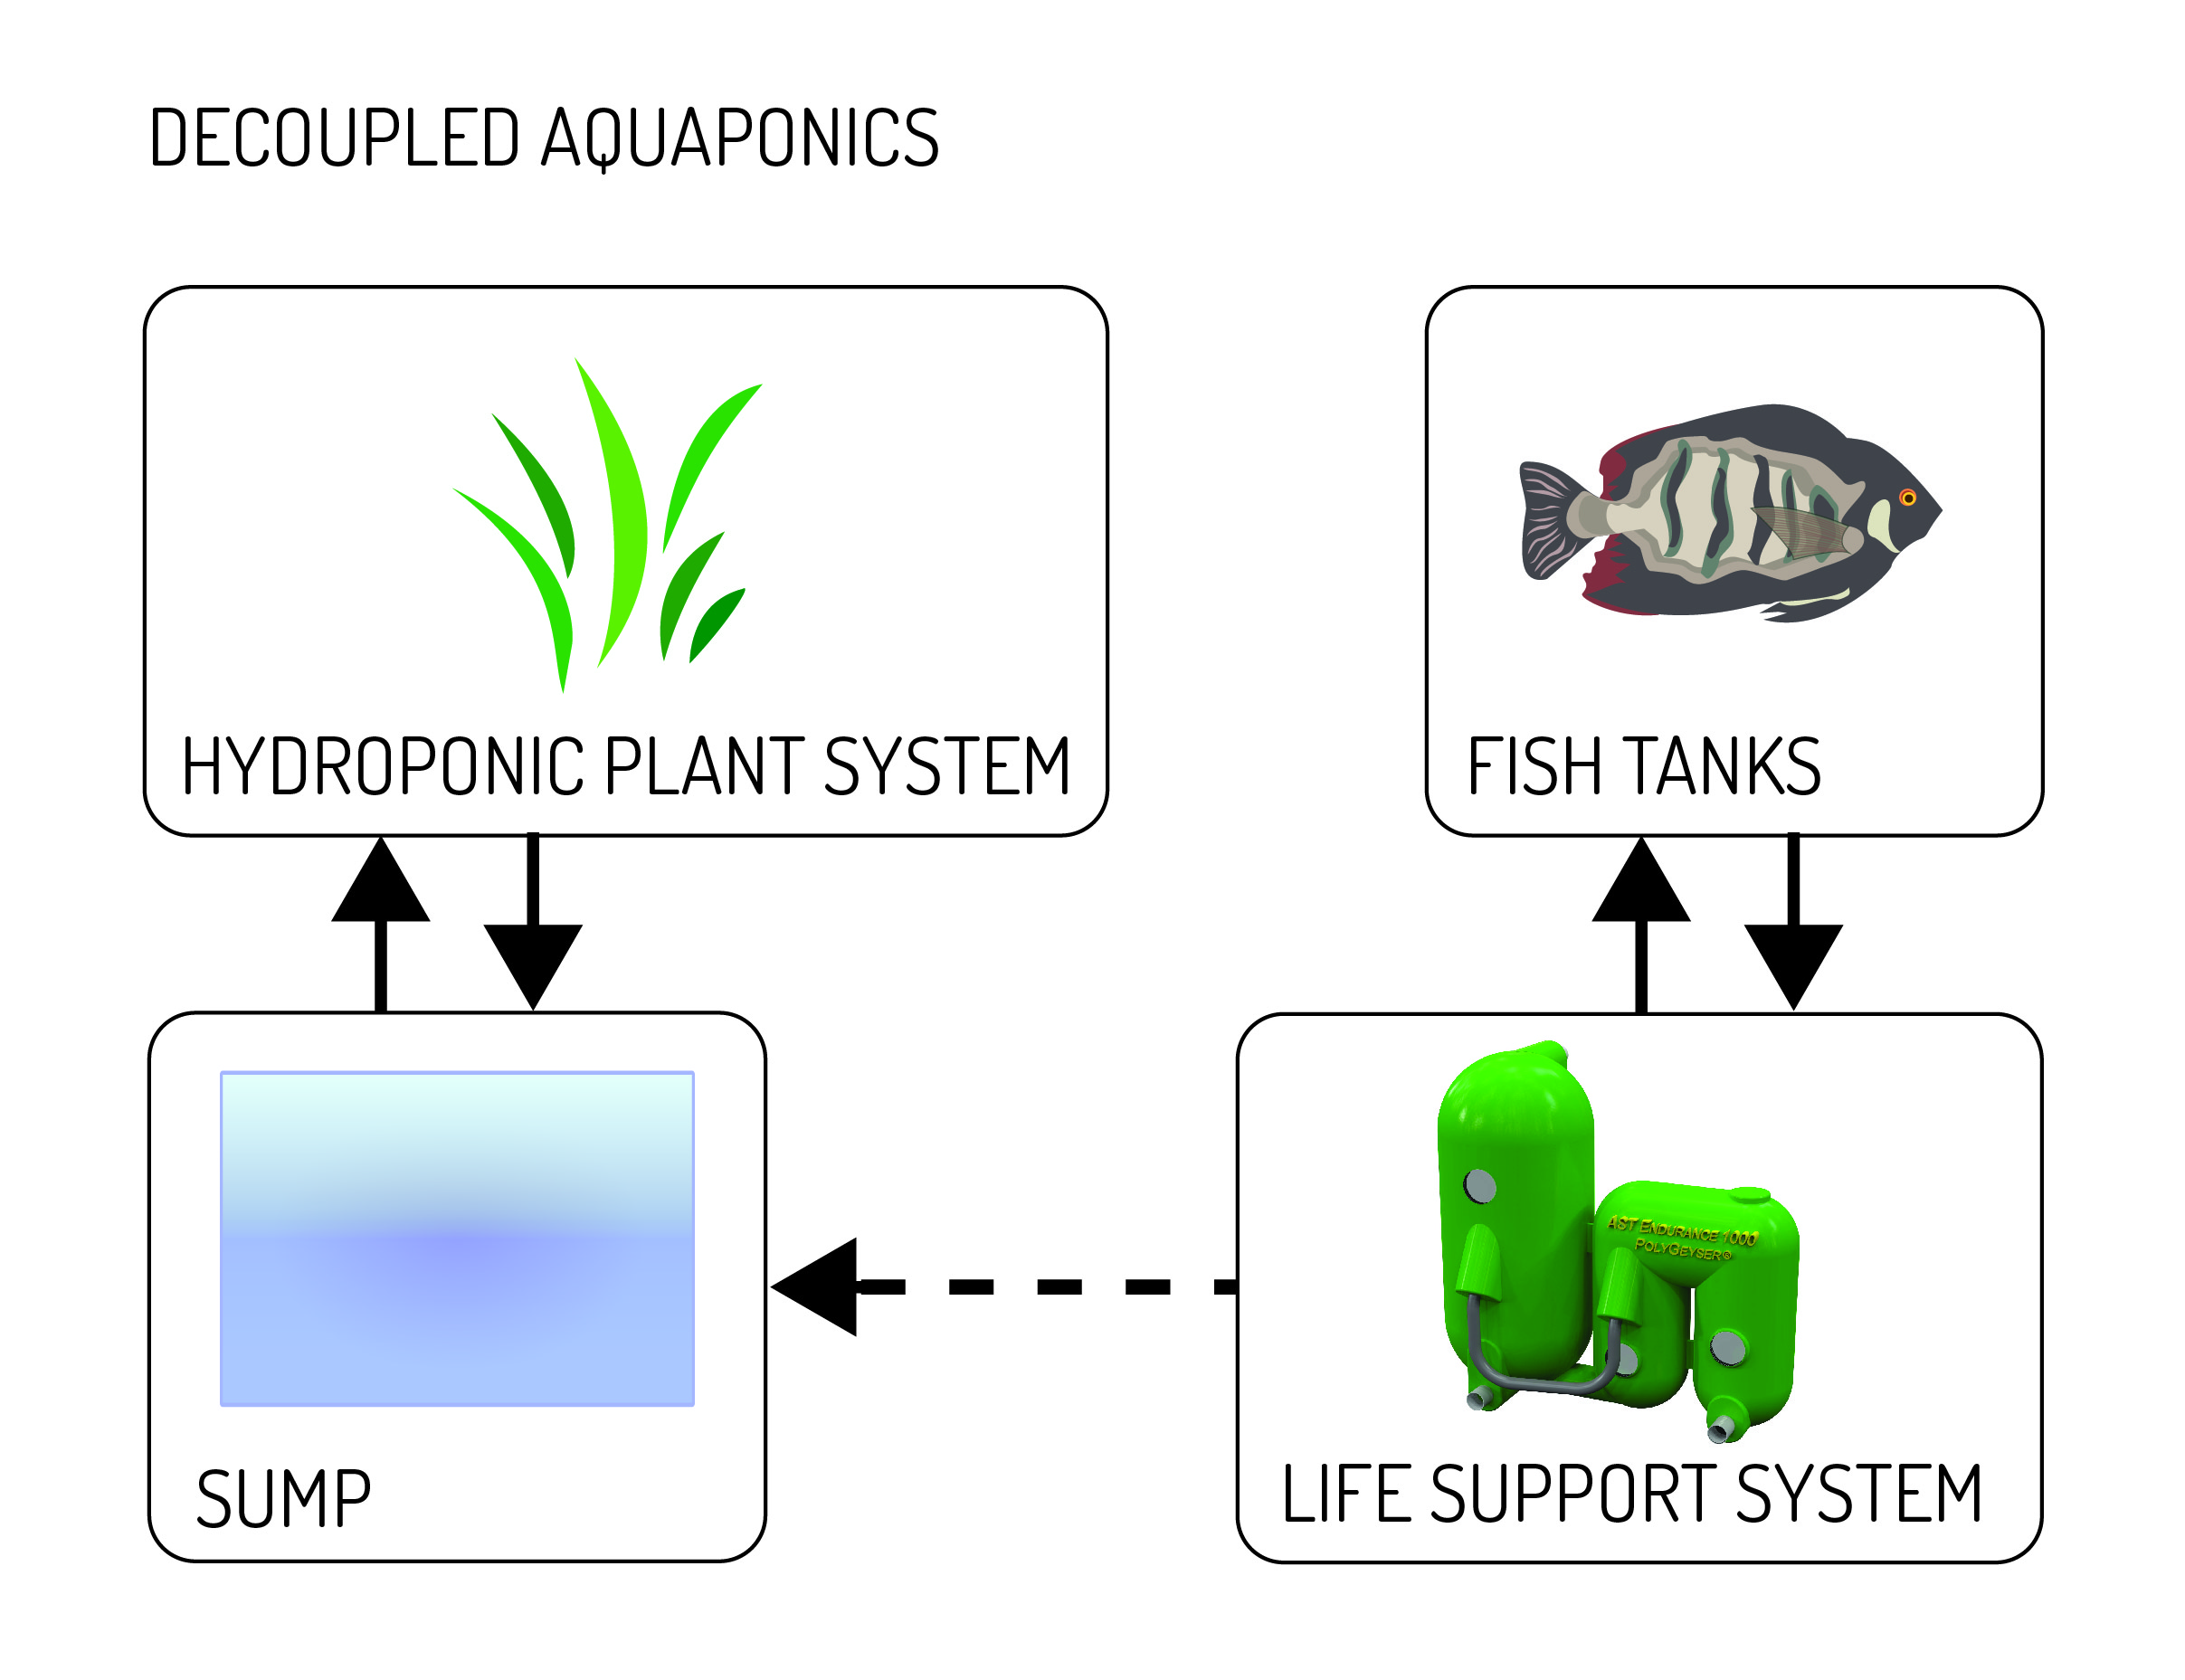 What is a Decoupled Aquaponics System?